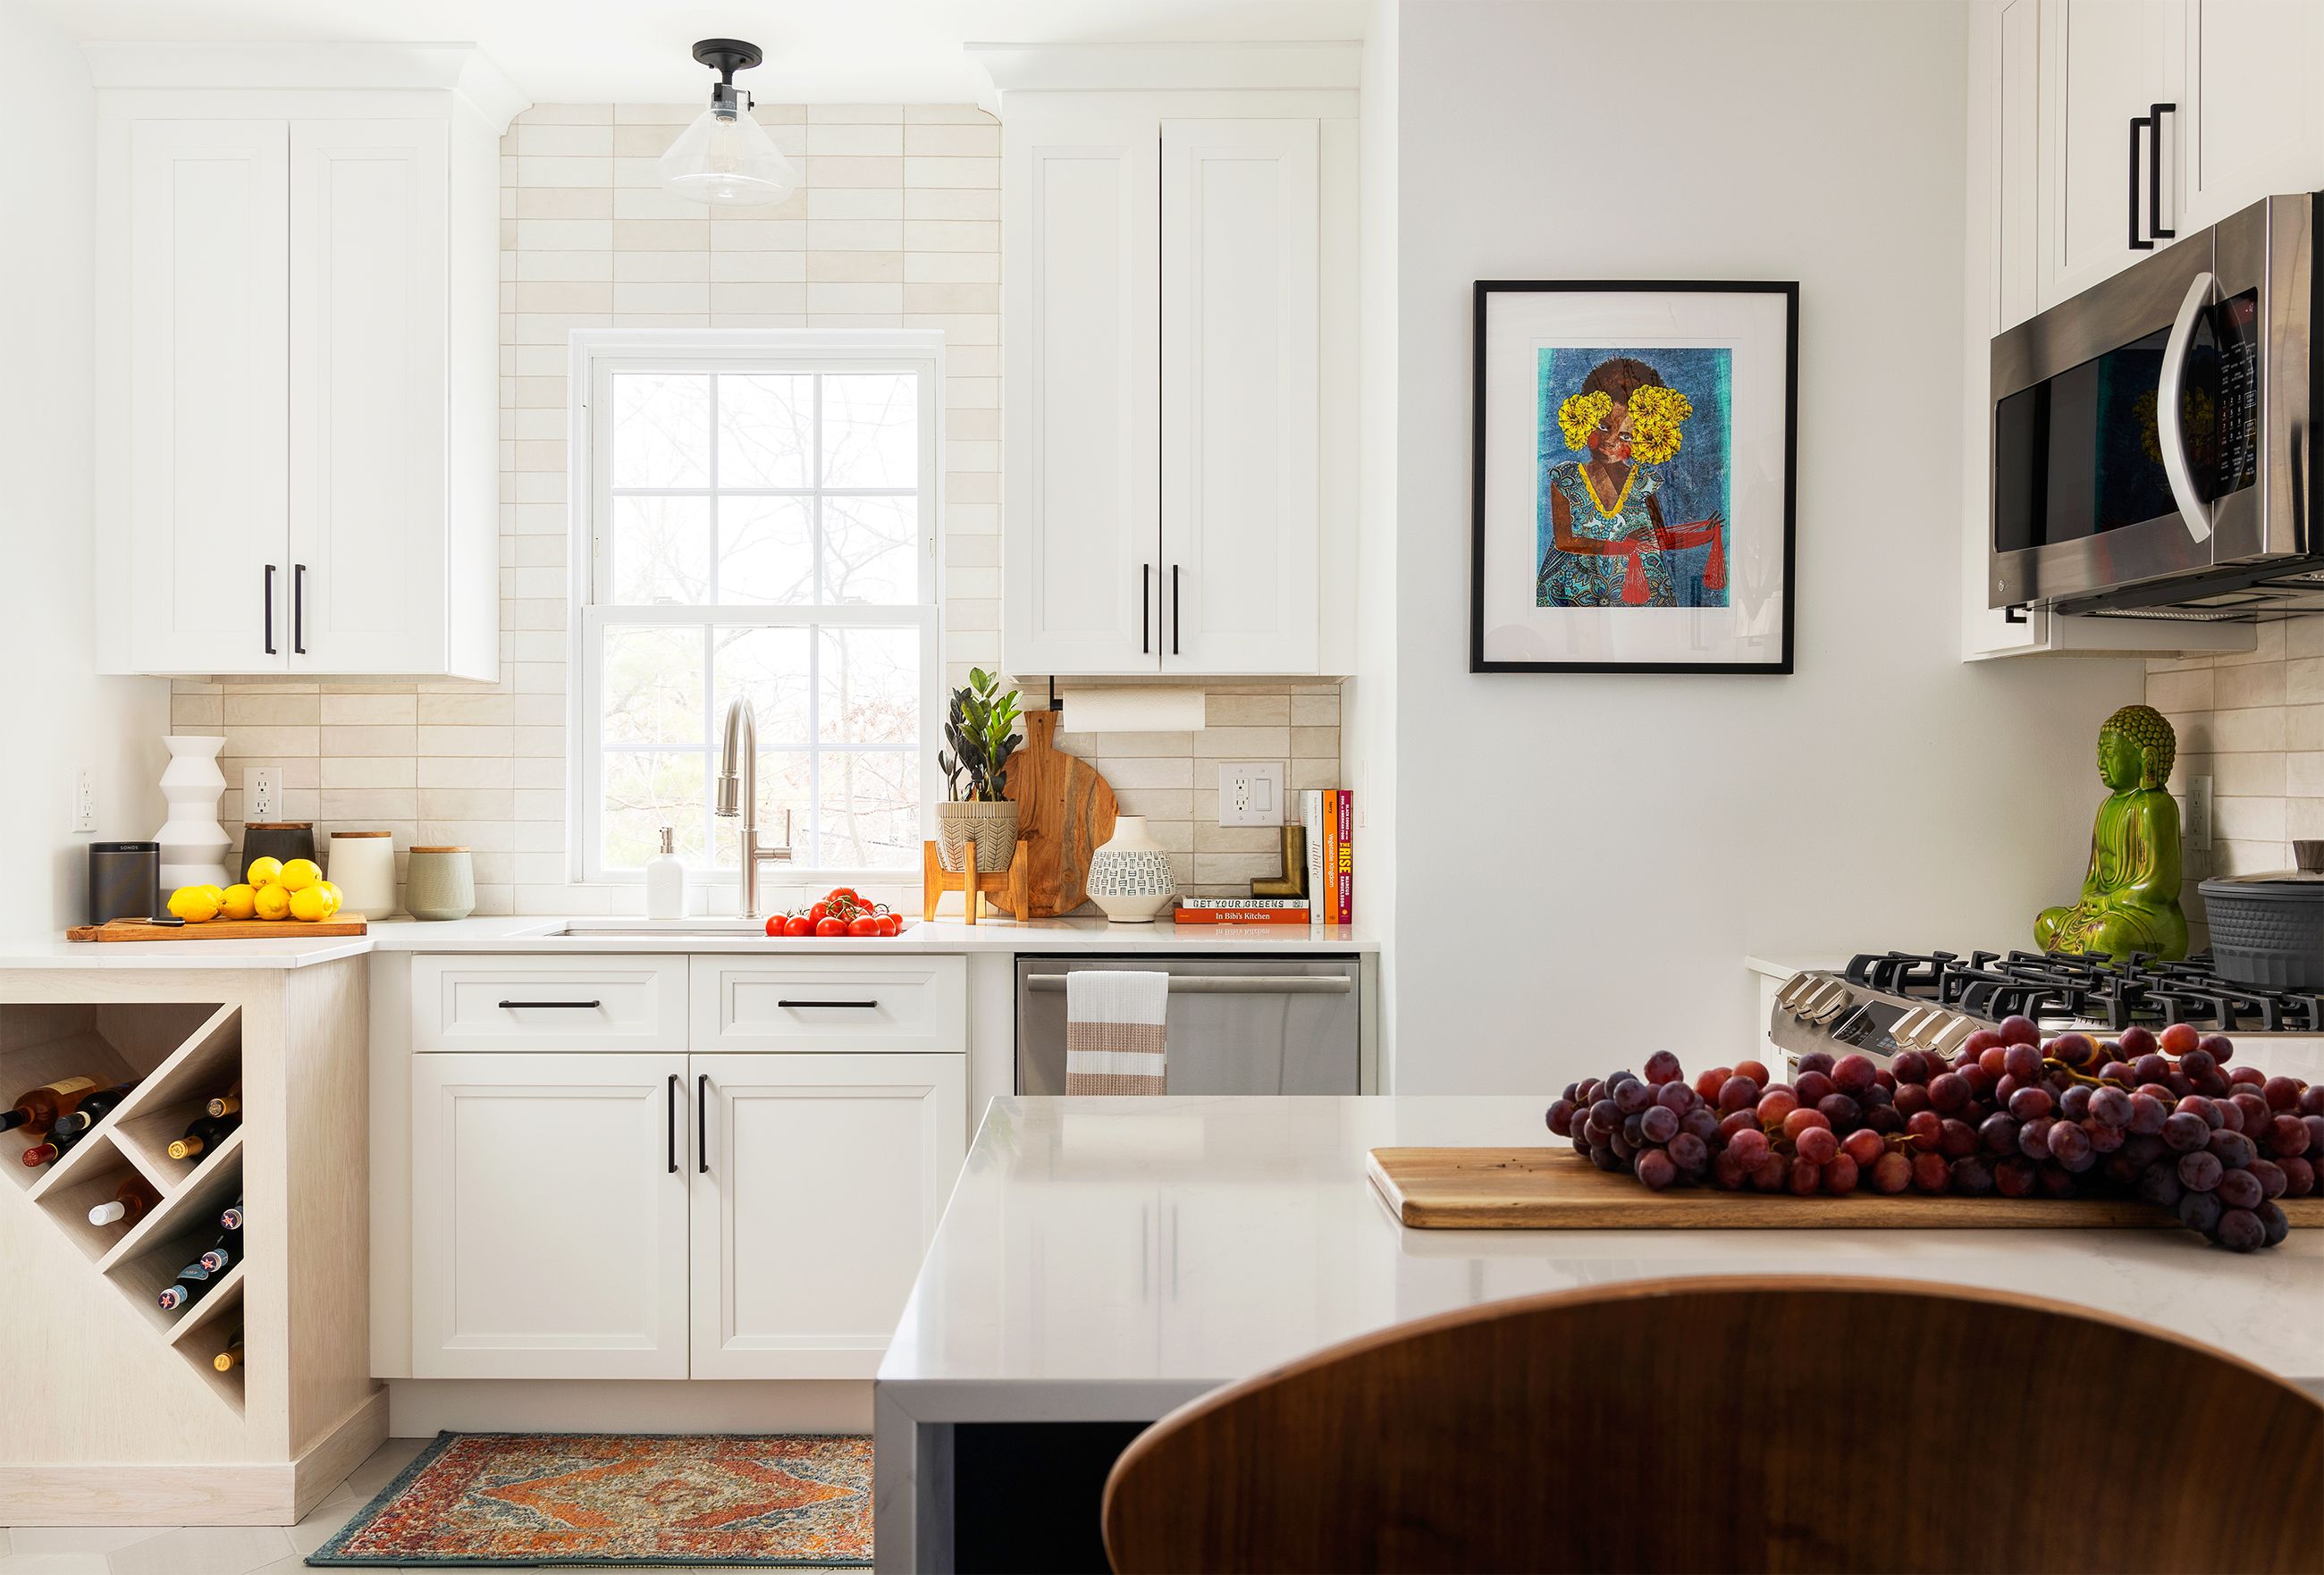 20 Best Kitchen Ideas   Decor and Decorating Ideas for Kitchen Design